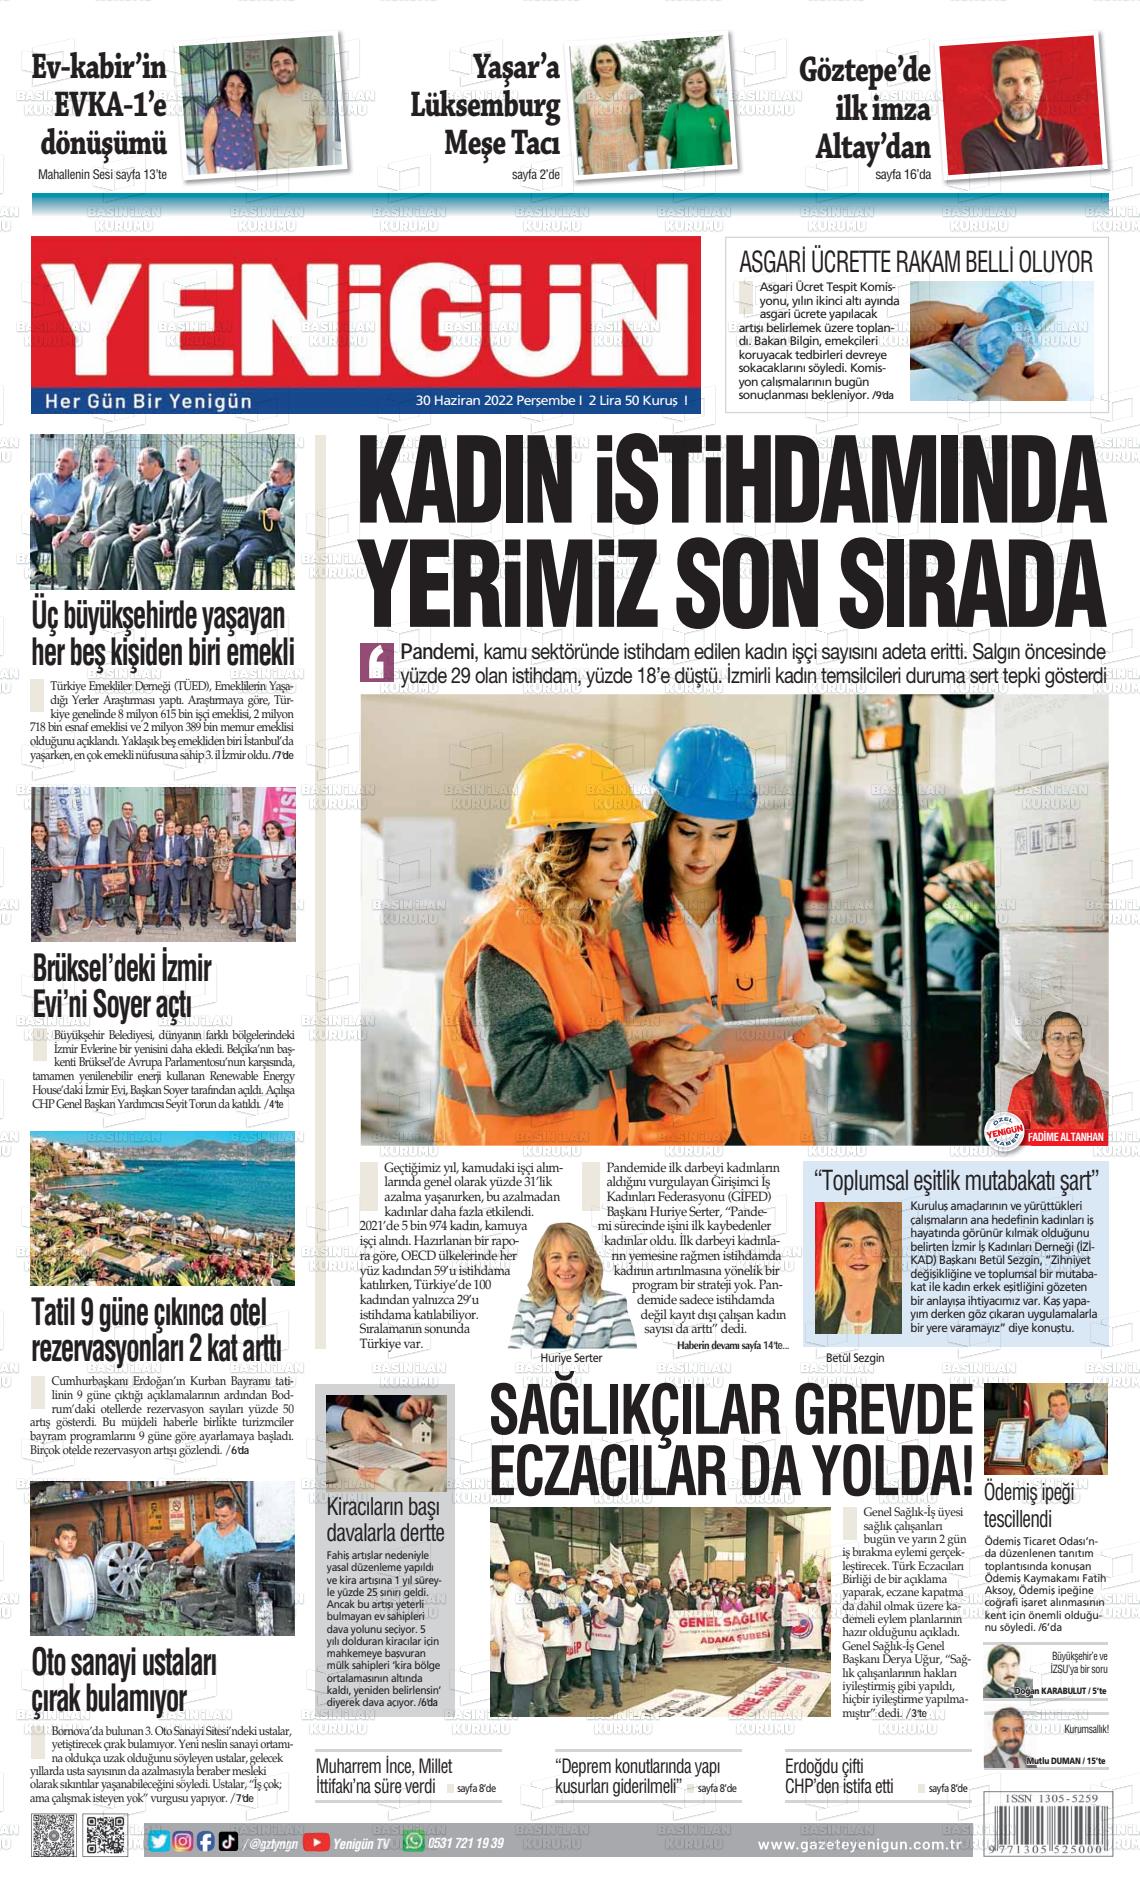 30 Haziran 2022 Yeni Gün Gazete Manşeti